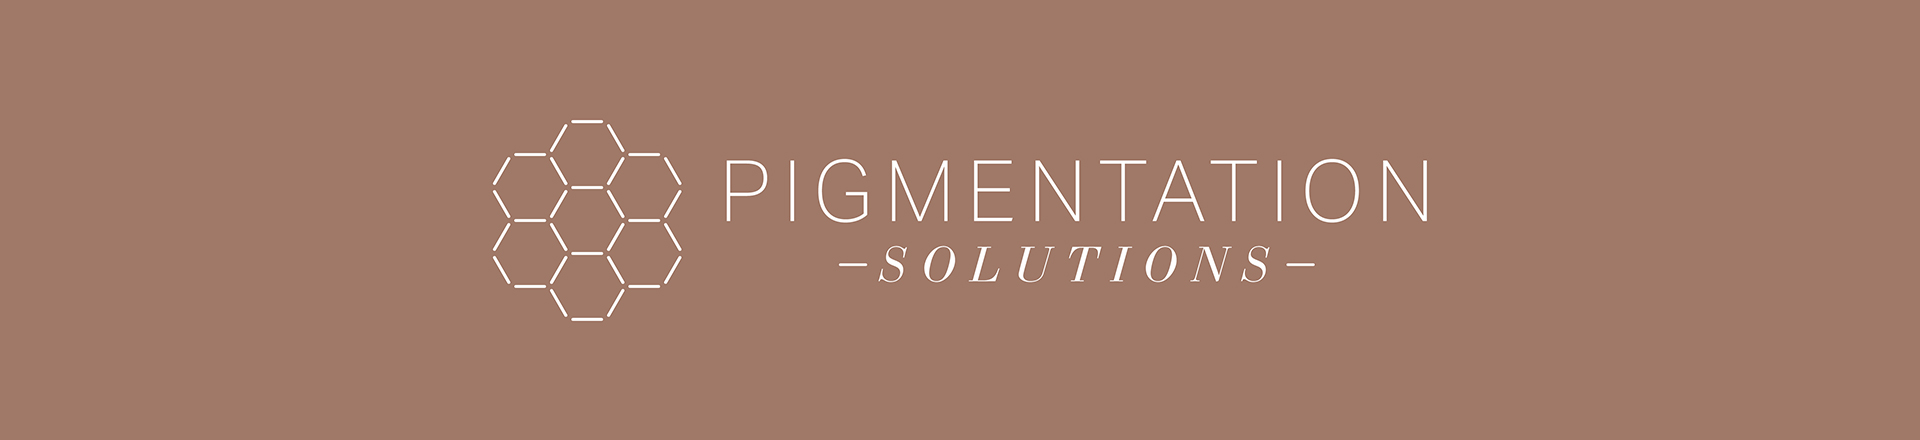 Pigmentation Solutions